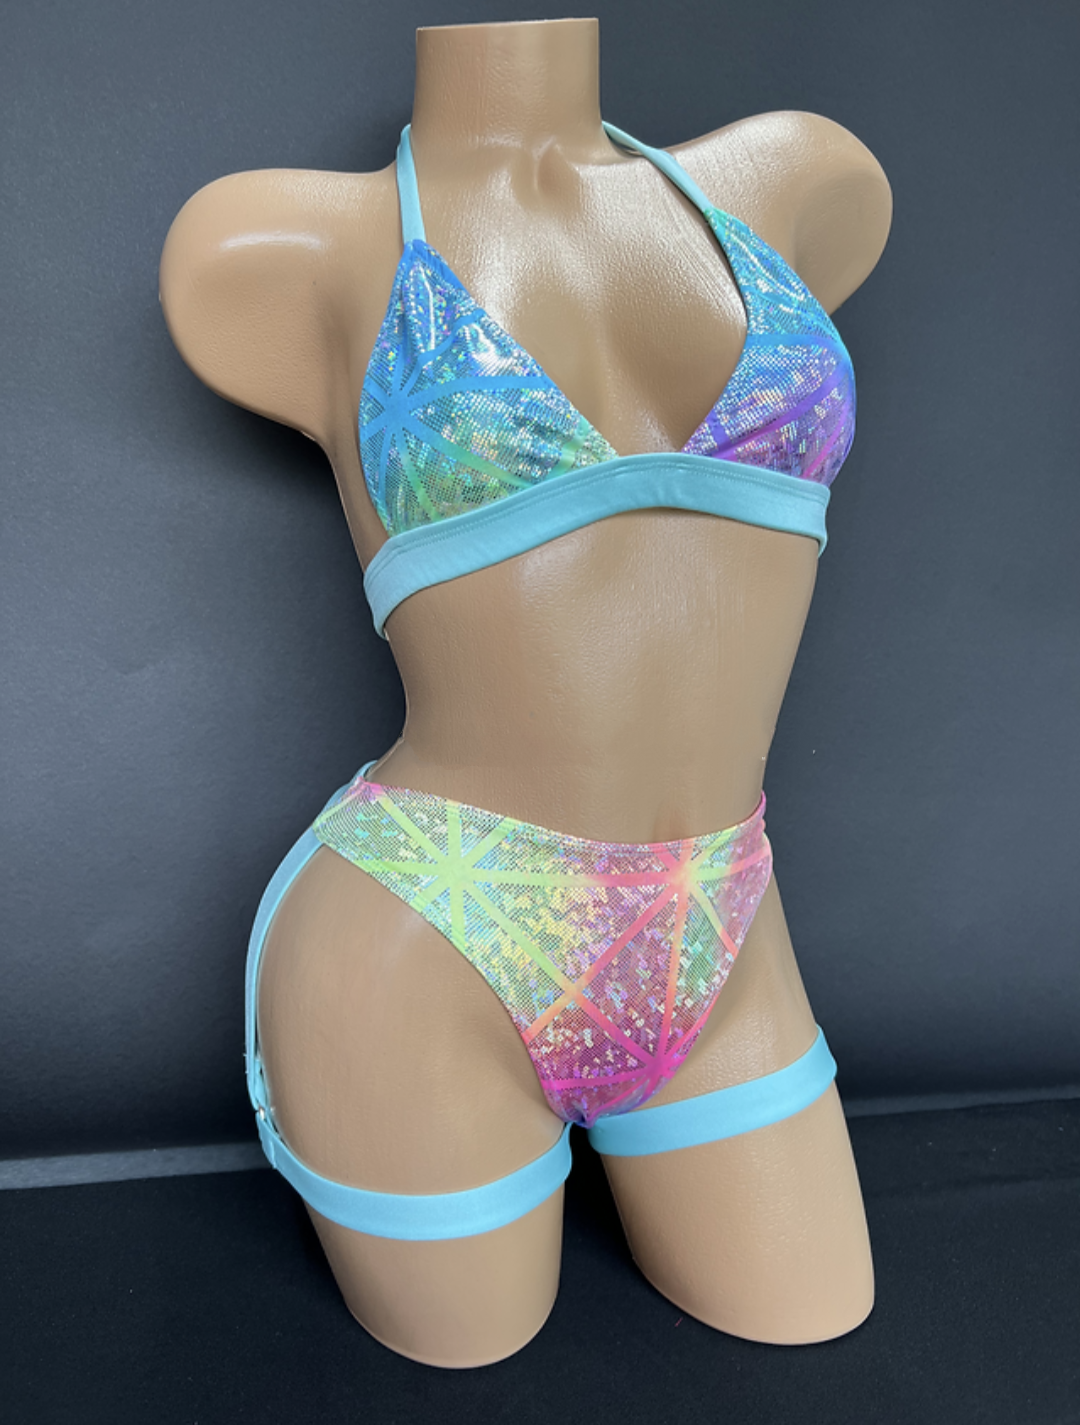 Pixie Hologram Garter Thong Bikini (Size S/M)